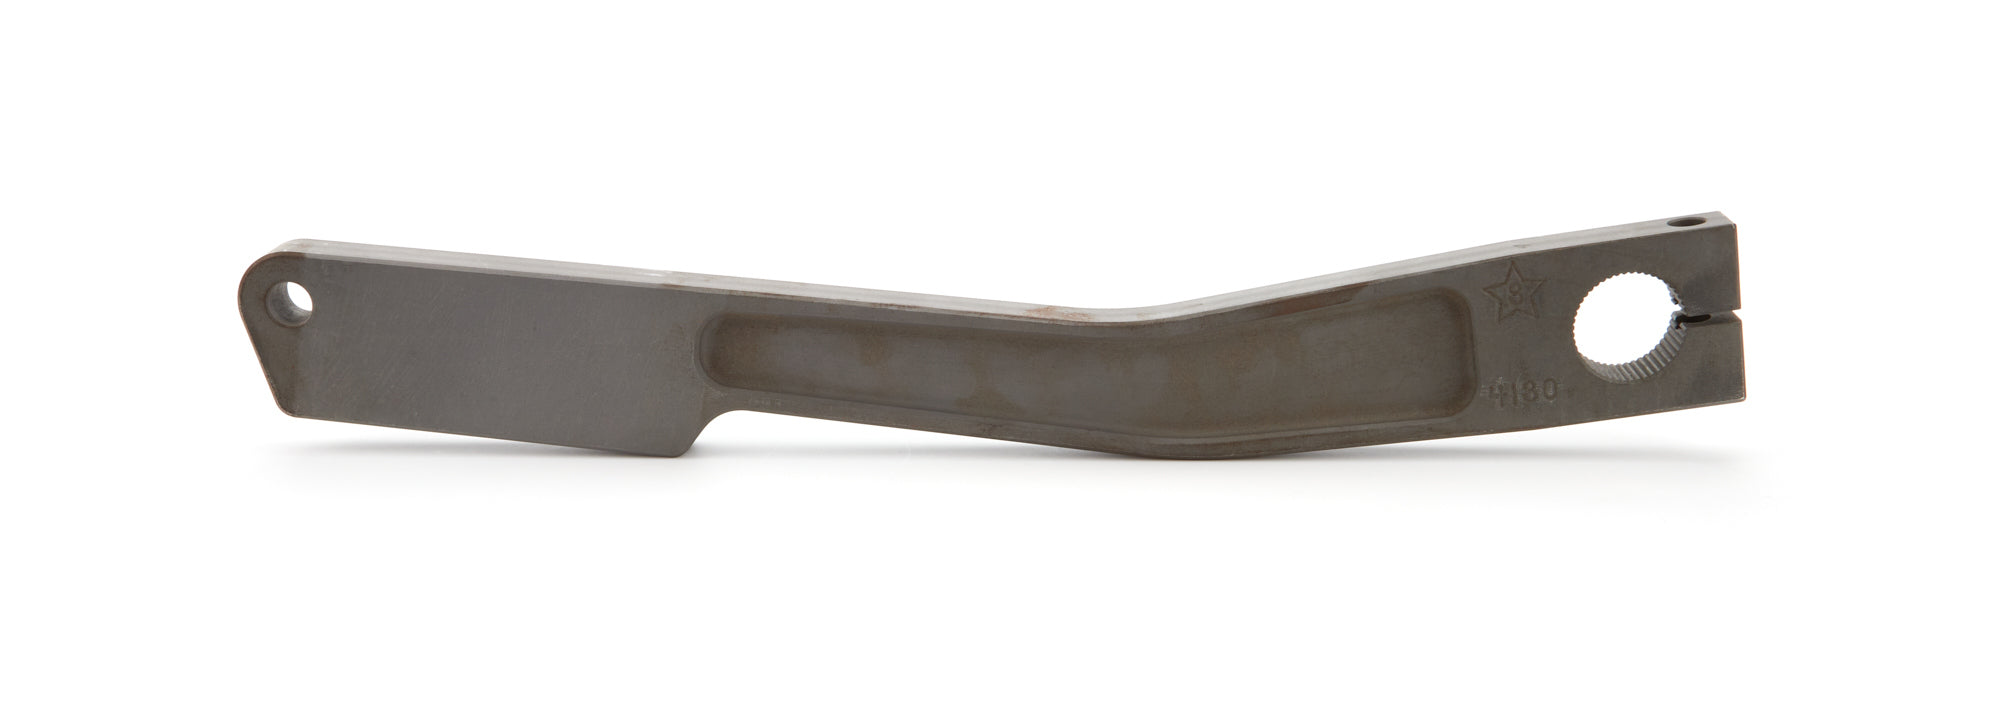 Schroeder Racing Products Sway Bar Arm Chrome Moly 15 Deg (Each) SHR125491525